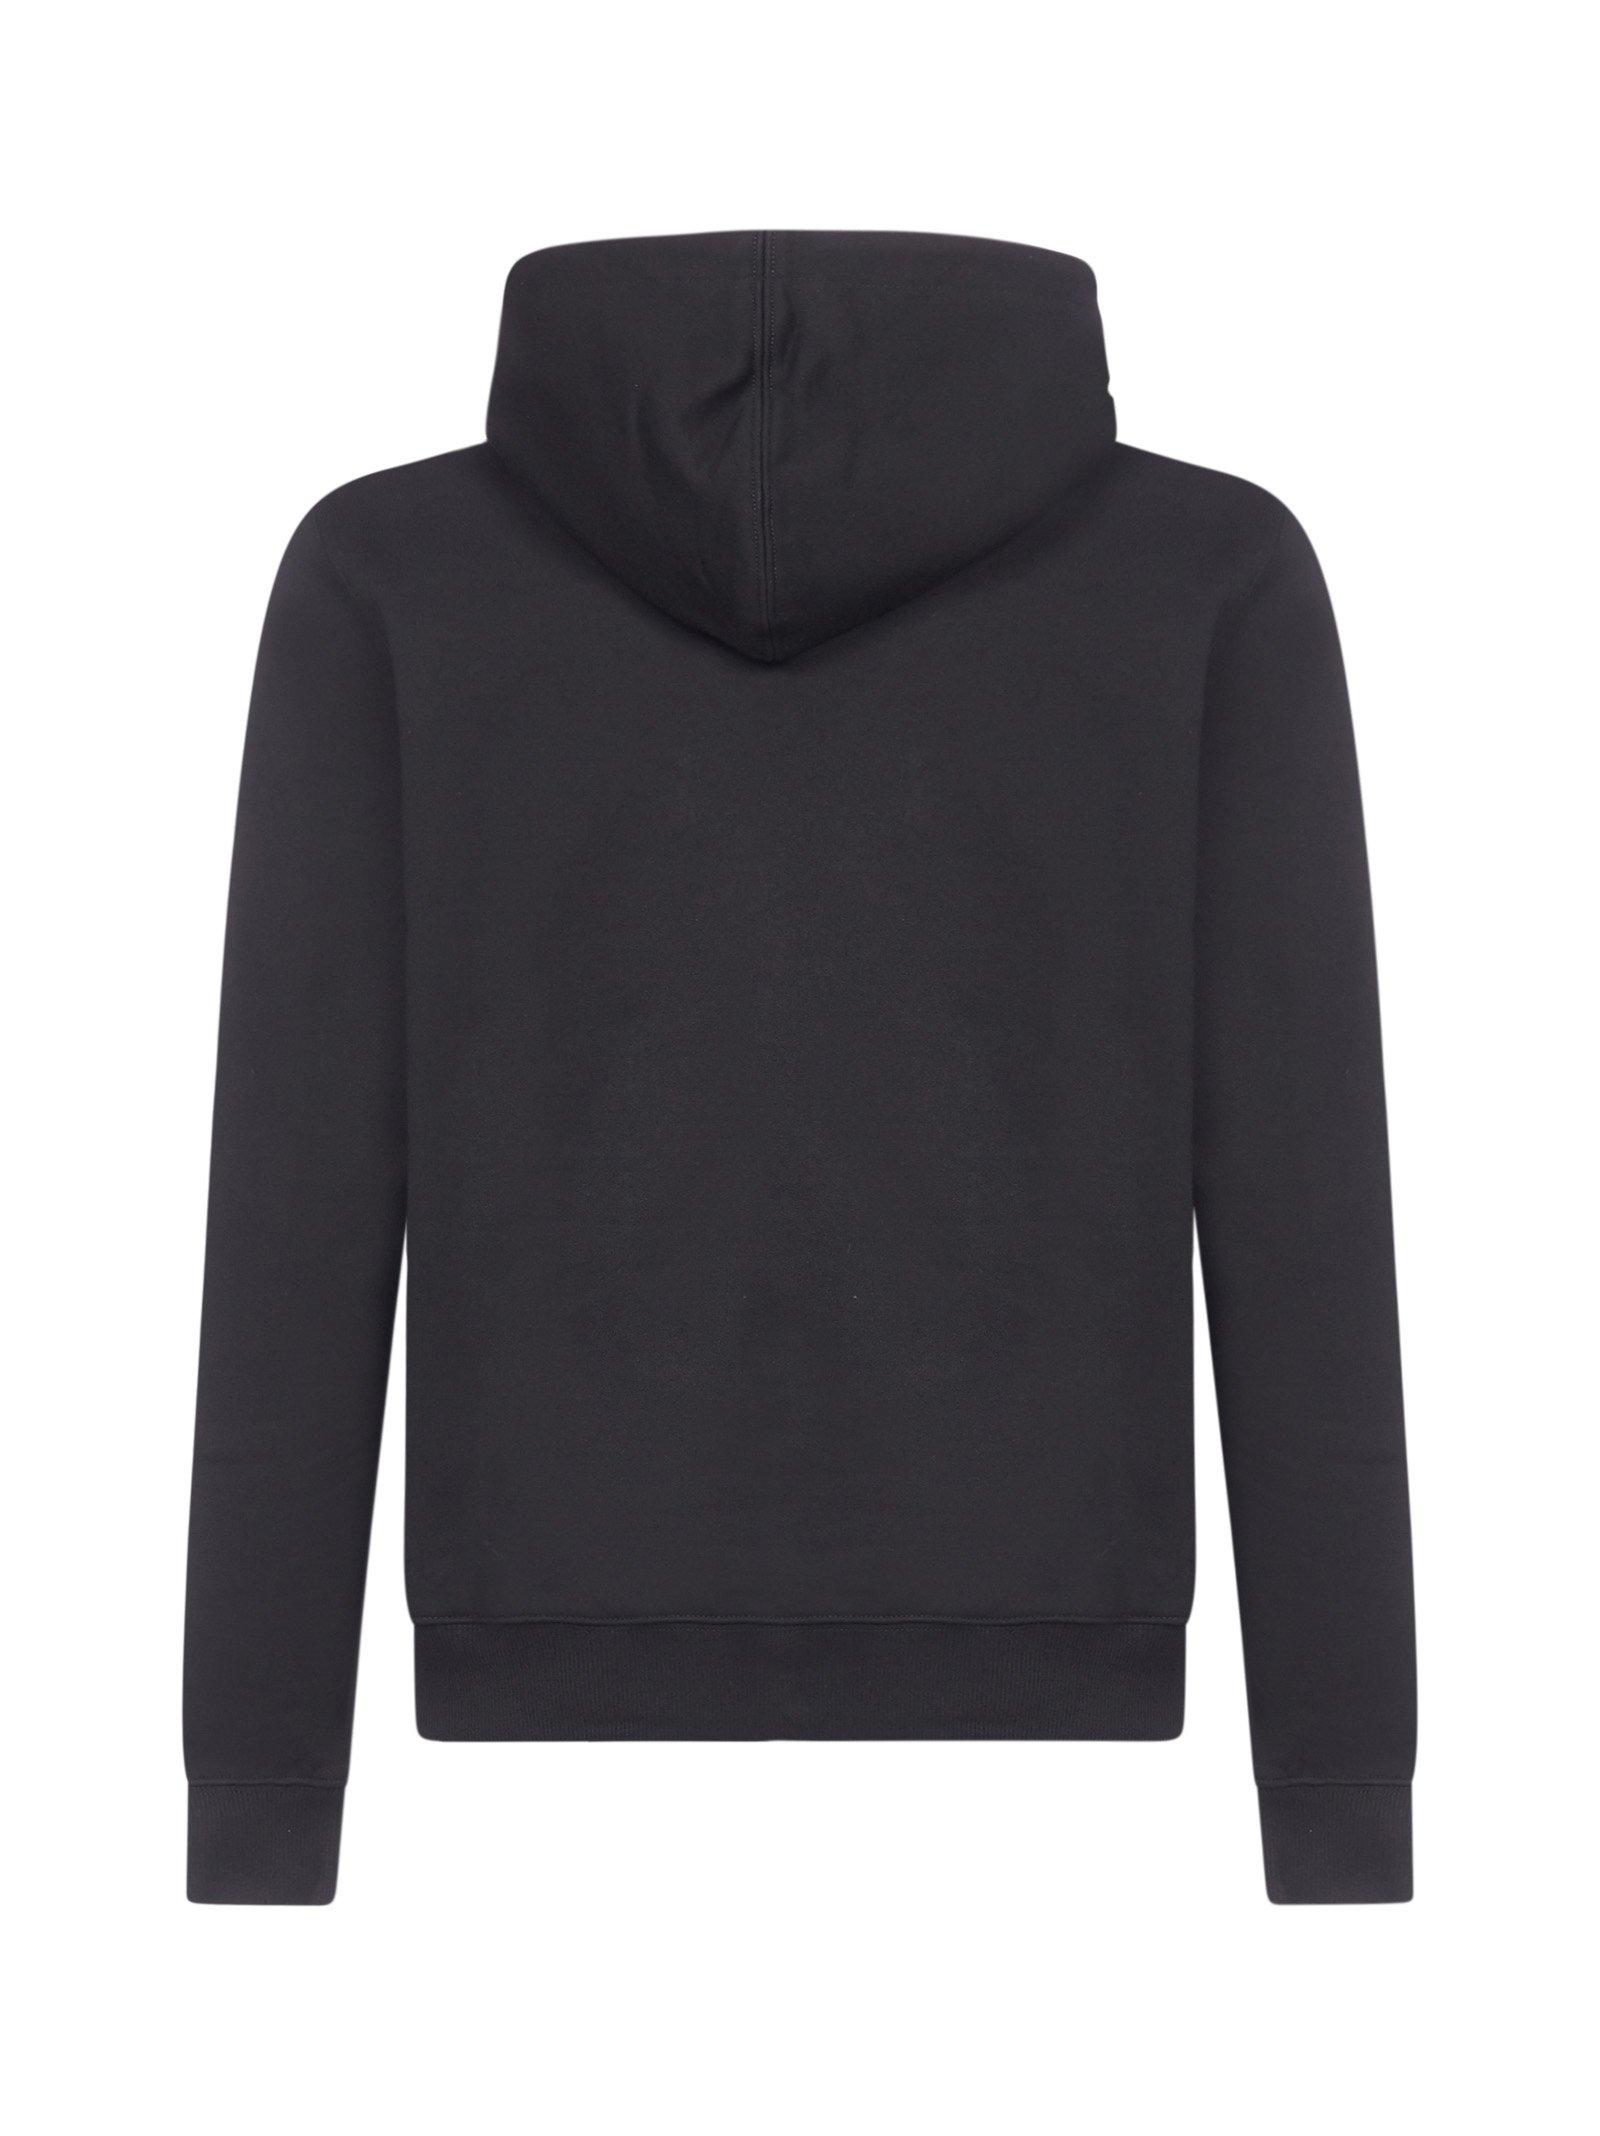 Dior - 'cd Icon' Hooded Sweatshirt with Zip Black Cashmere Jersey - Size XL - Men